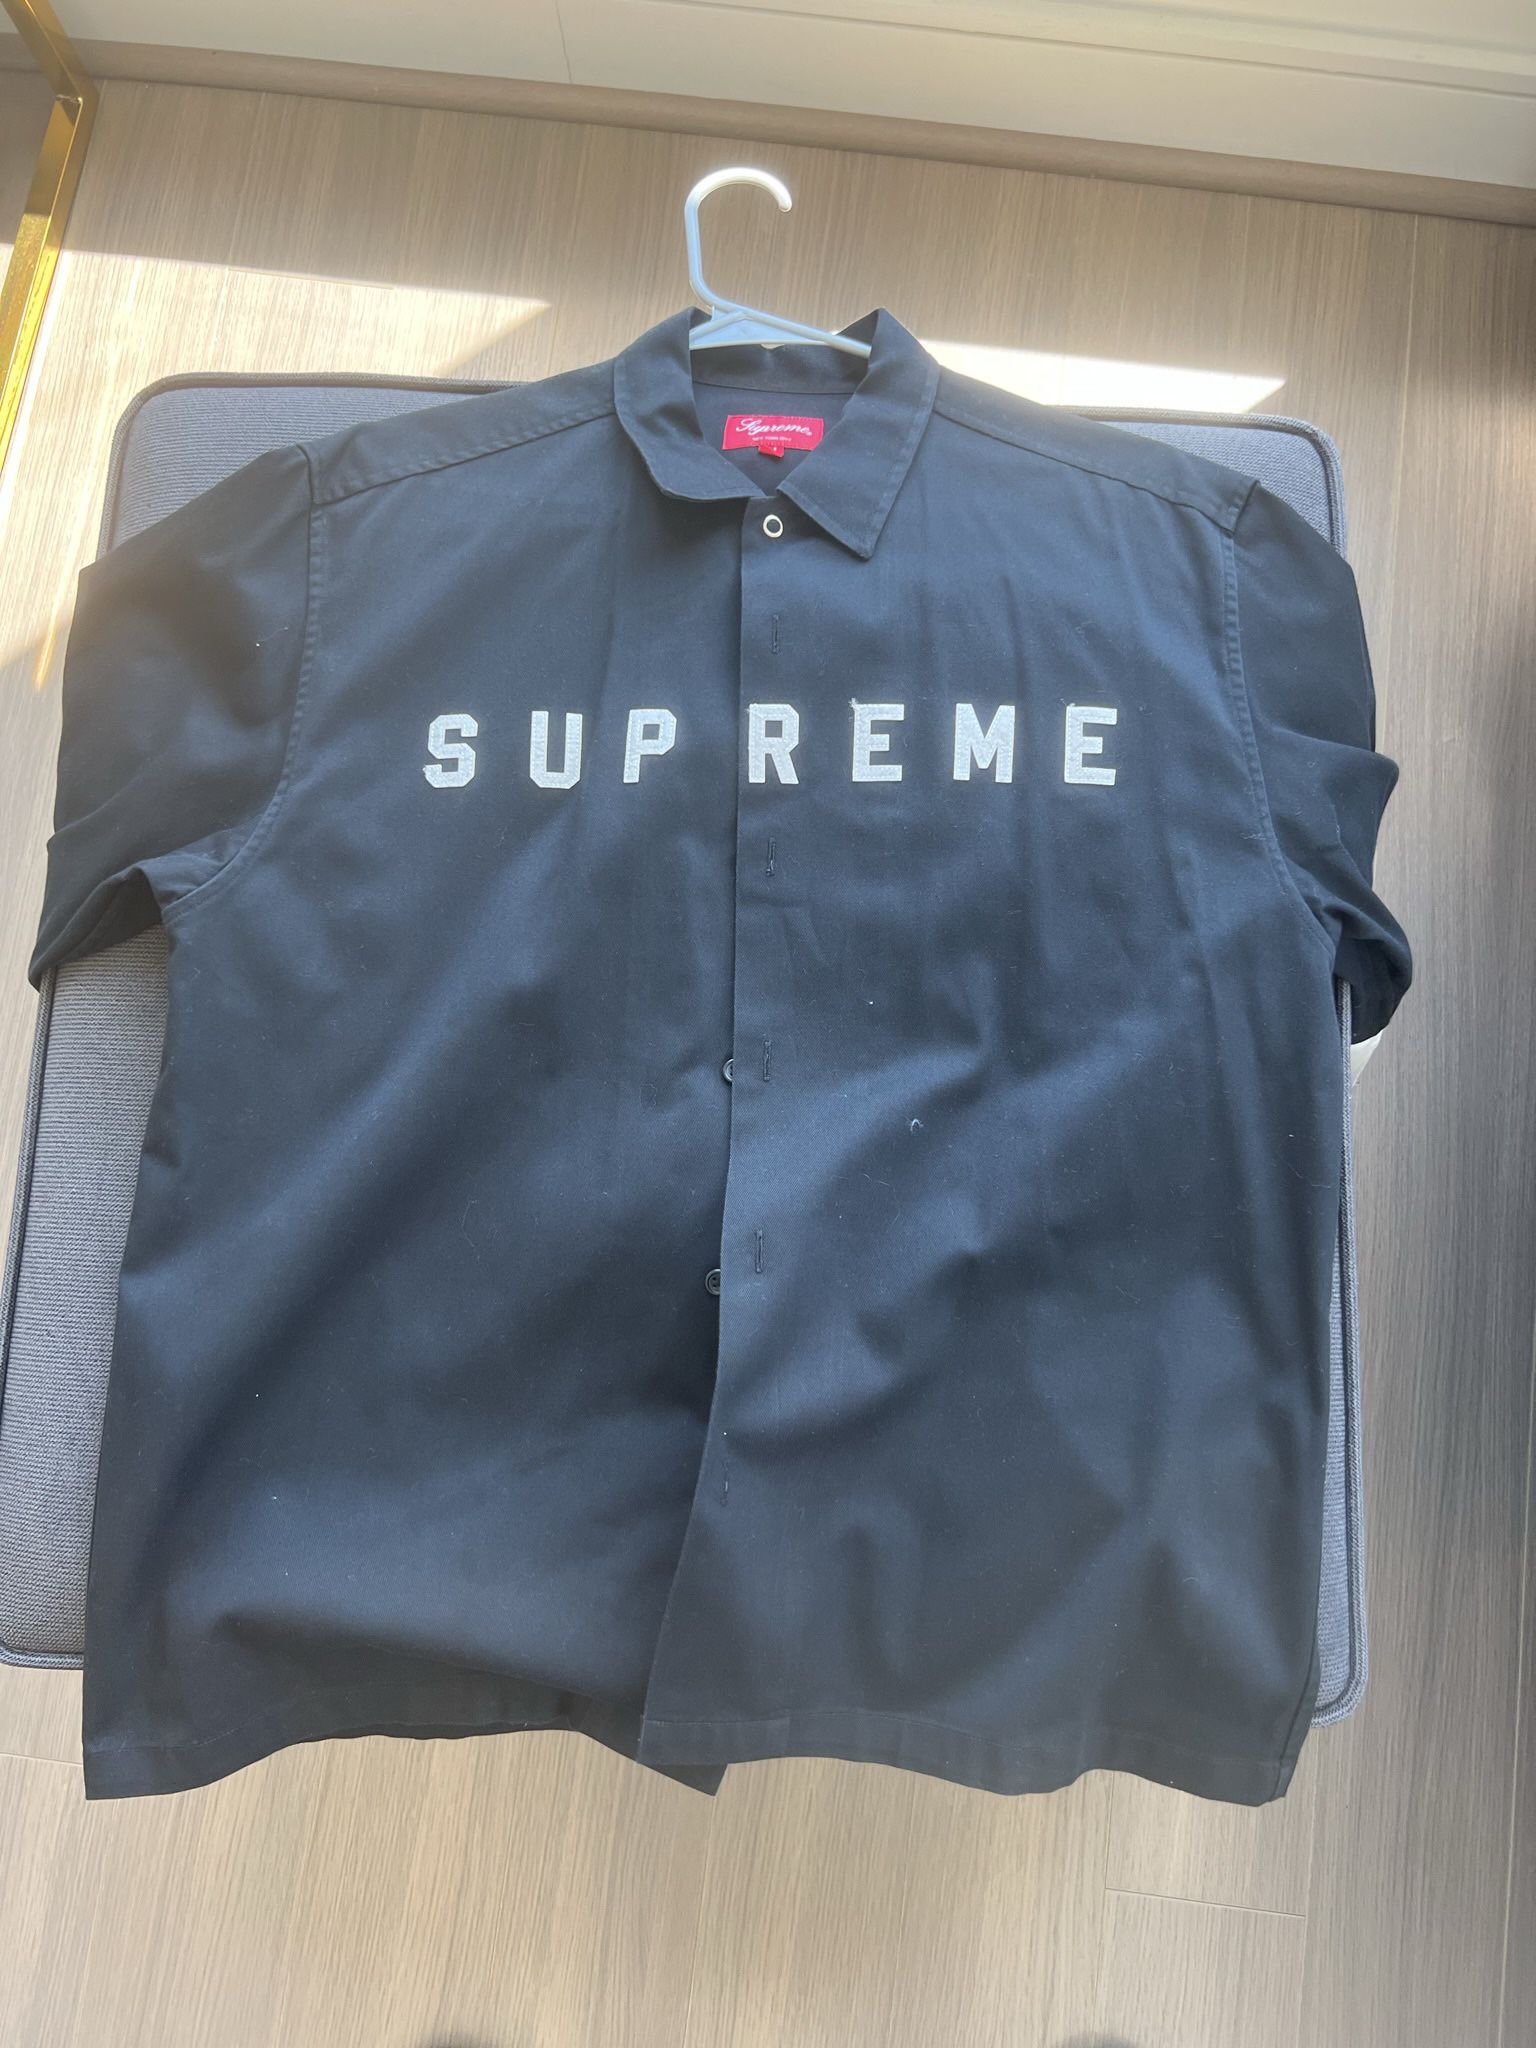 Supreme 2-Tone Work Shirt size M